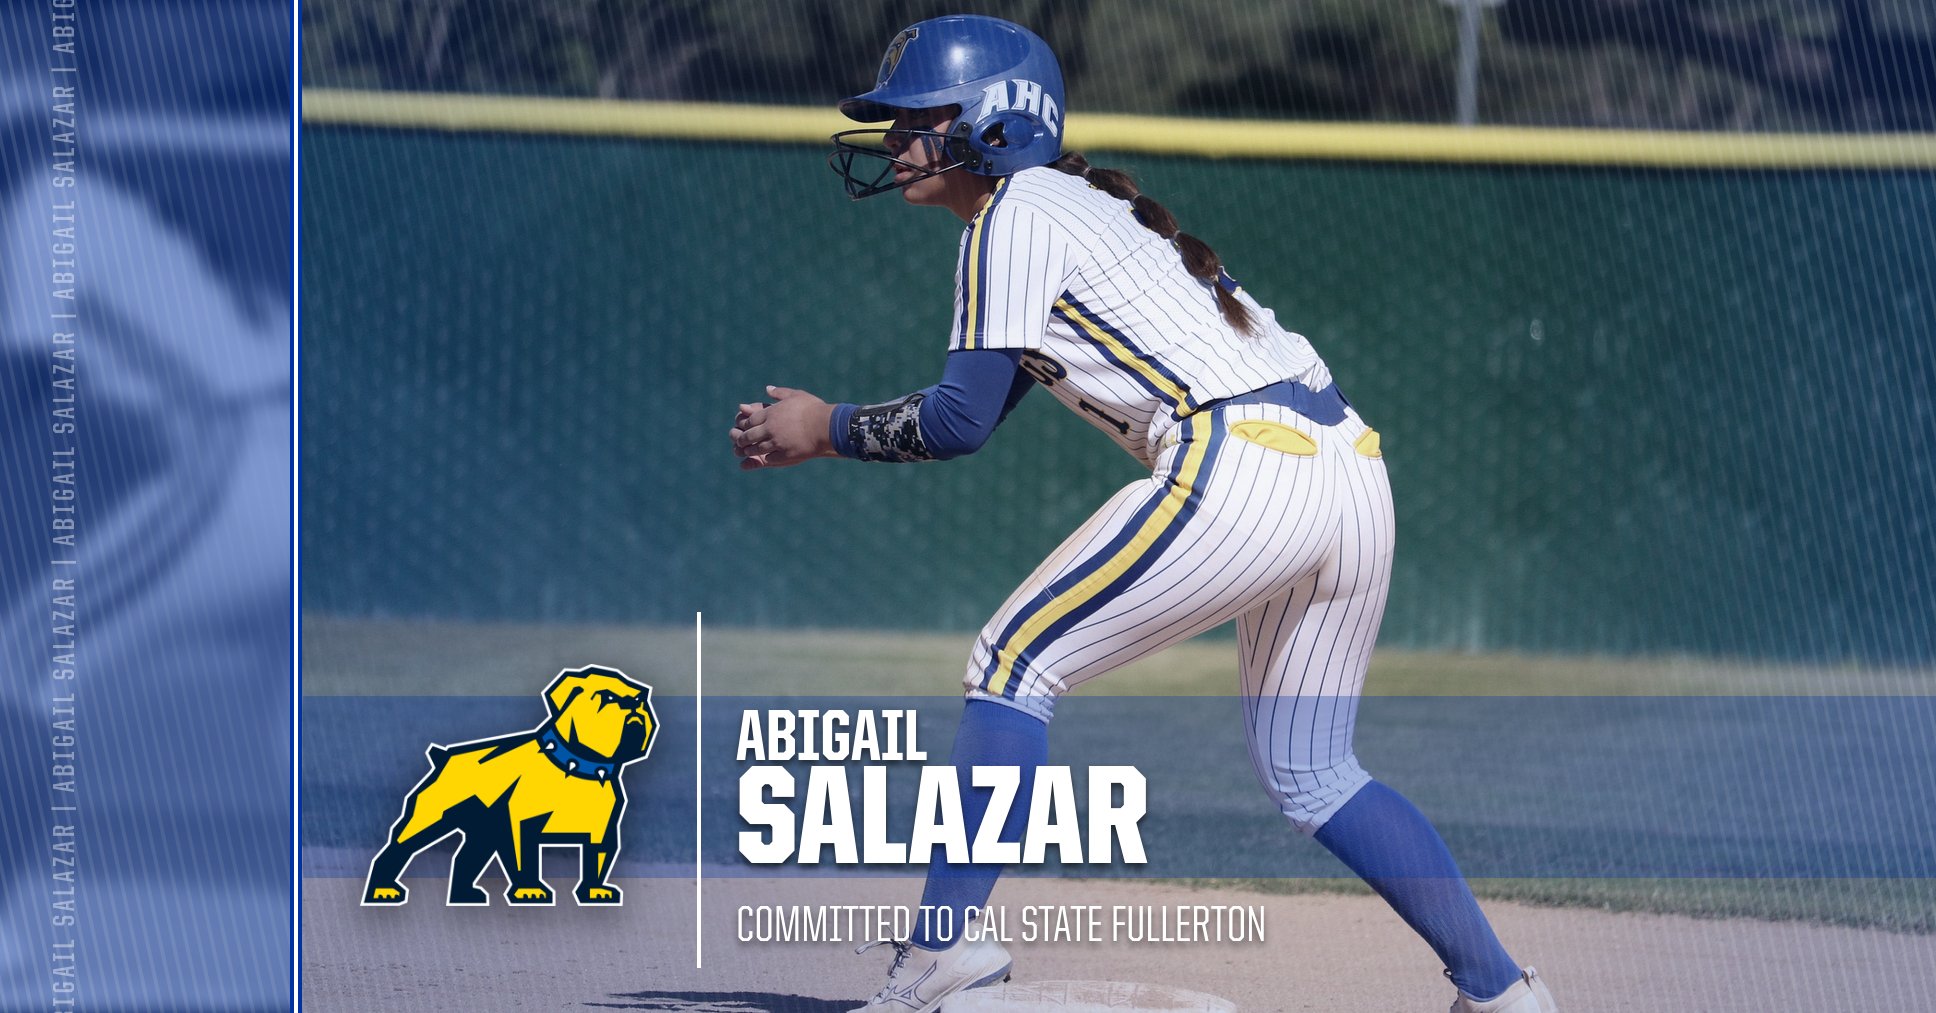 Softball's Abigail Salazar Headed to Cal State Fullerton